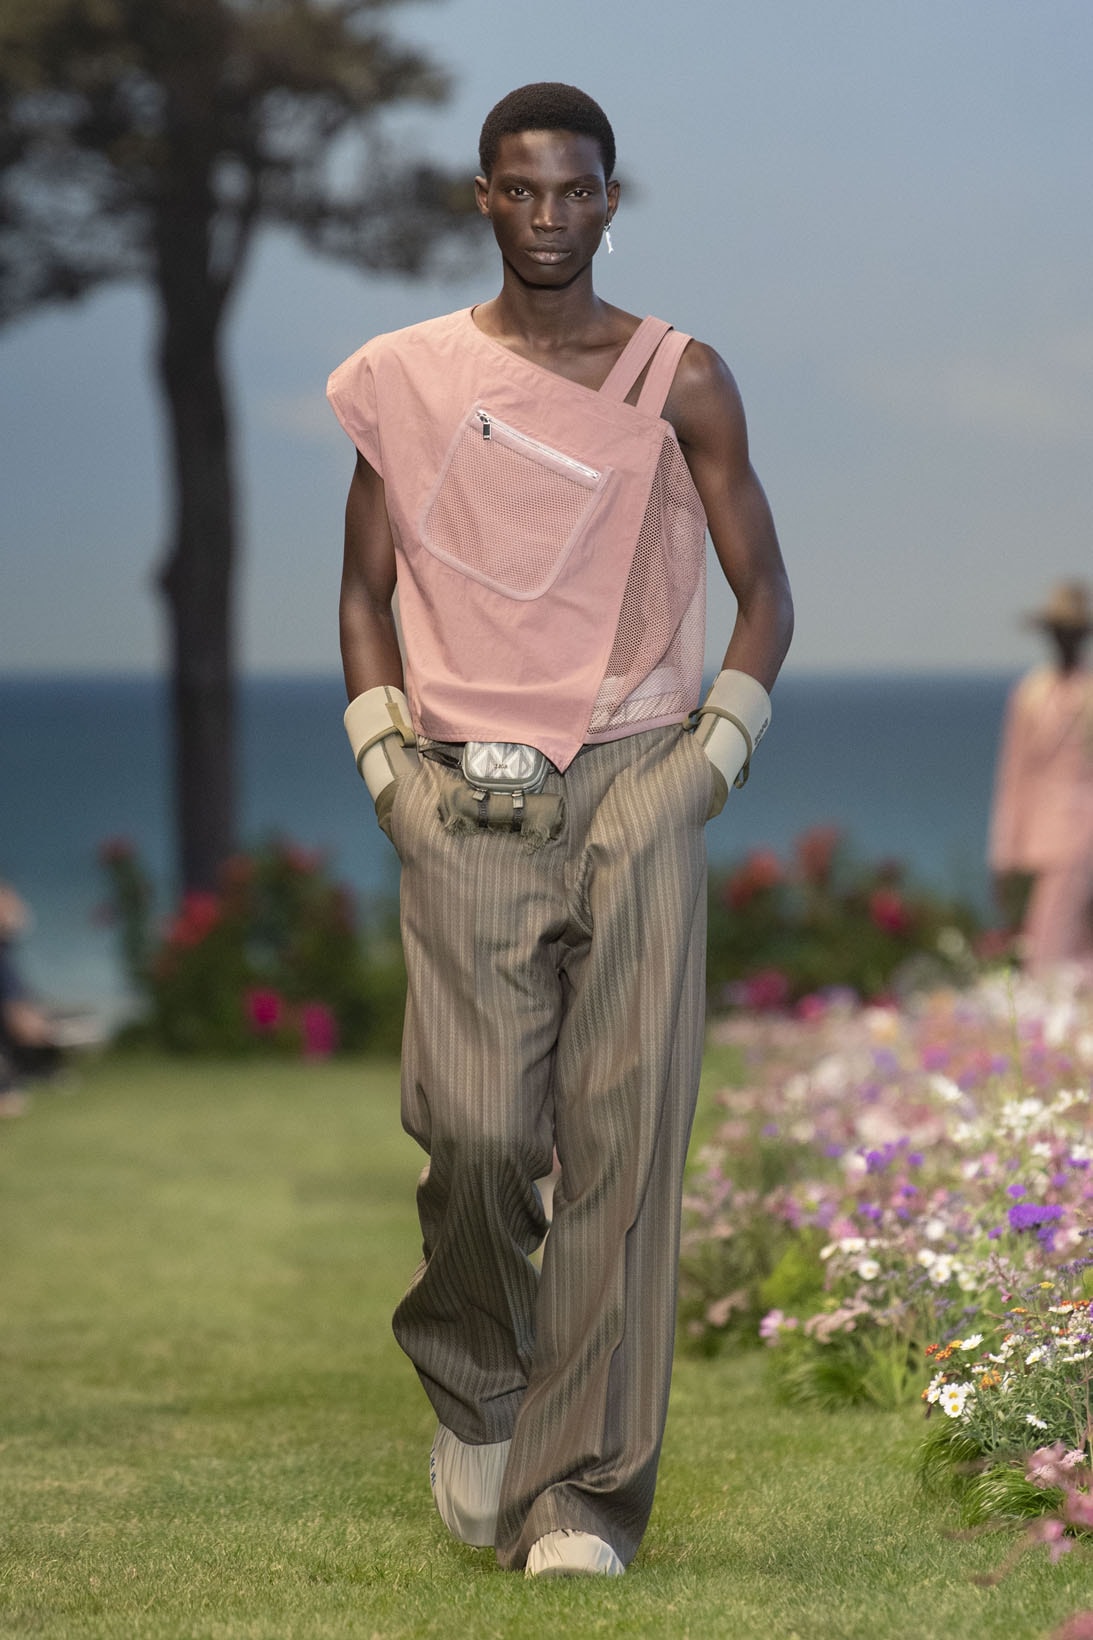 Dior Homme designer Kim Jones kicks back with A-list fashion crowd